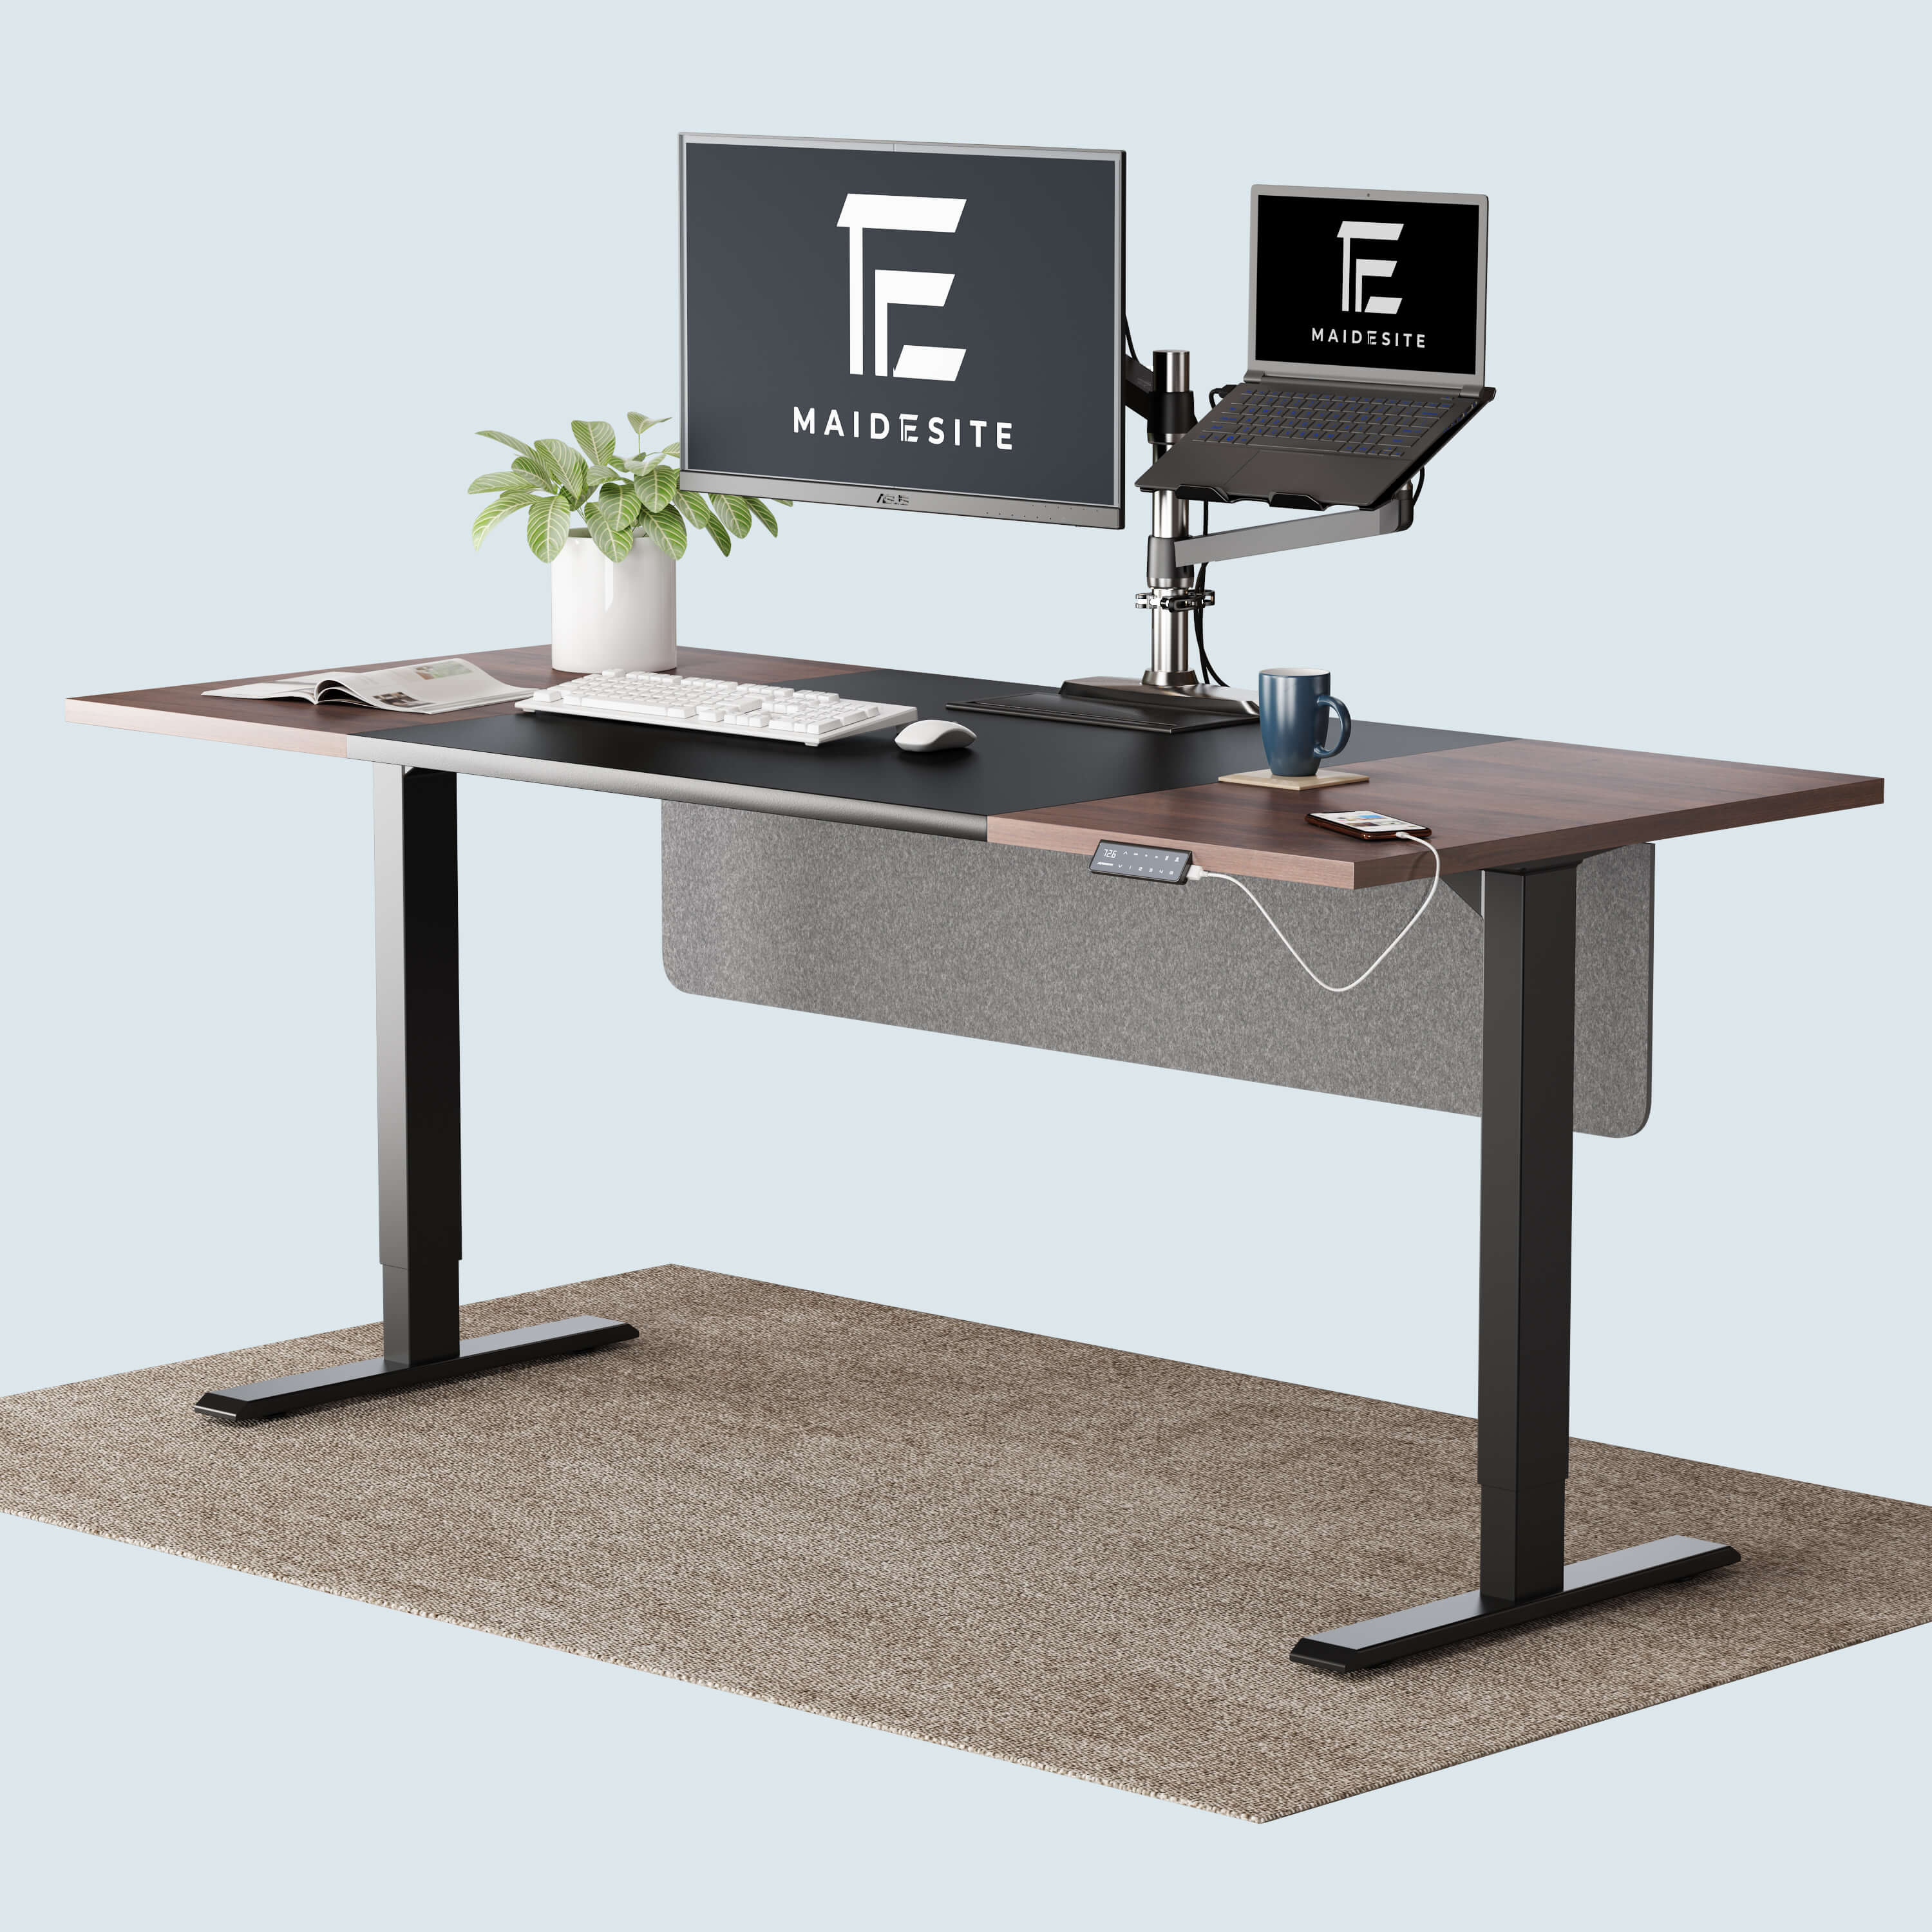 Maidesite 160cm black-walnut standing desk for comfortable home office